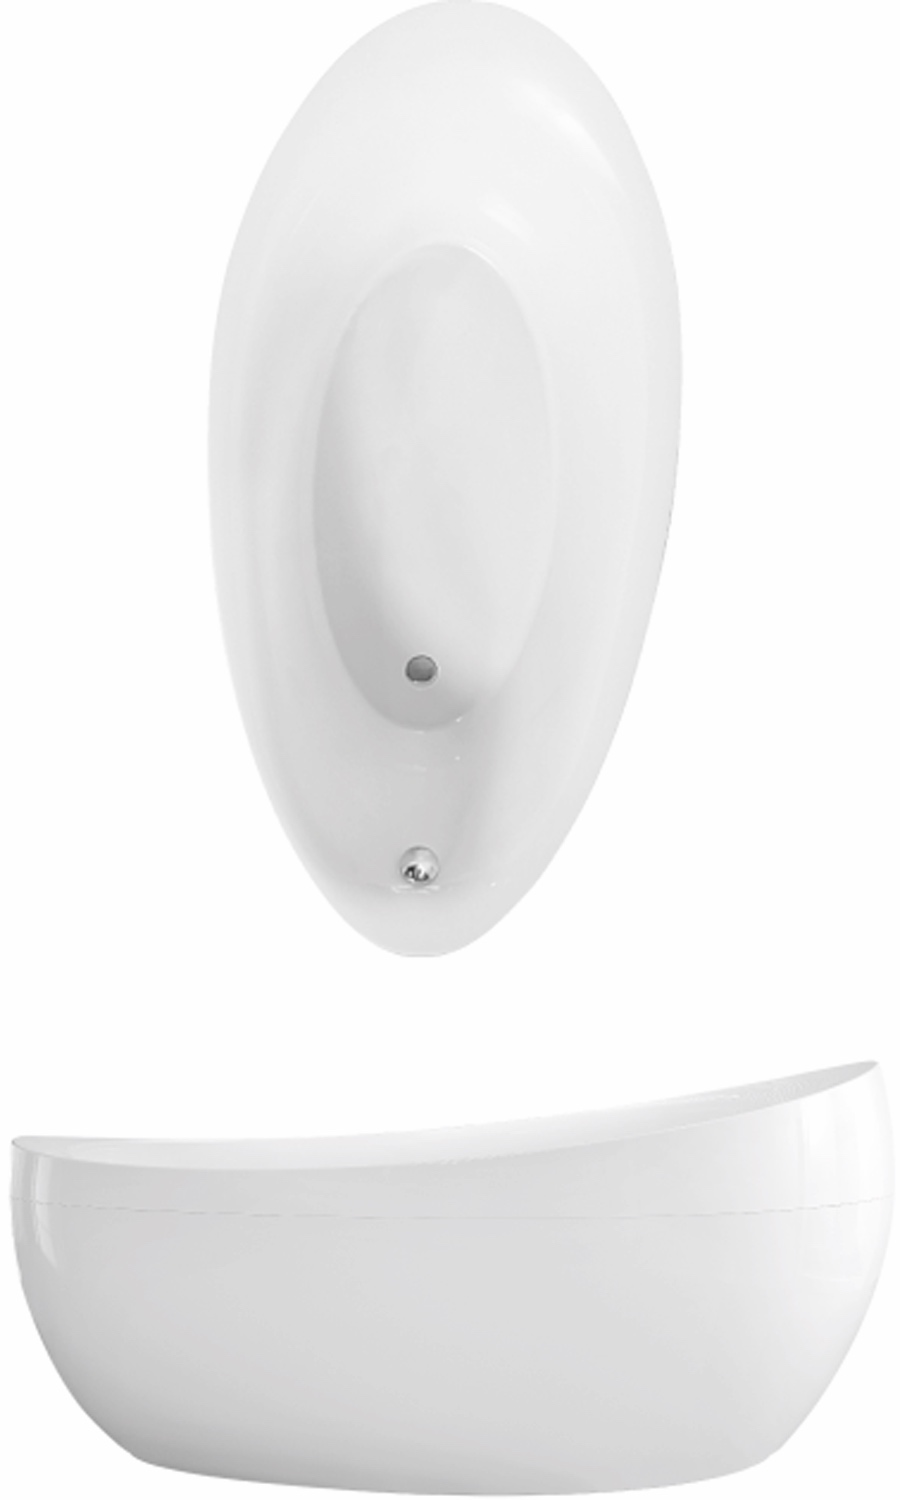 Villeroy & Boch oval Badewanne „Aveo“ freistehend 190 × 95 cm in Weiß Alpin, 